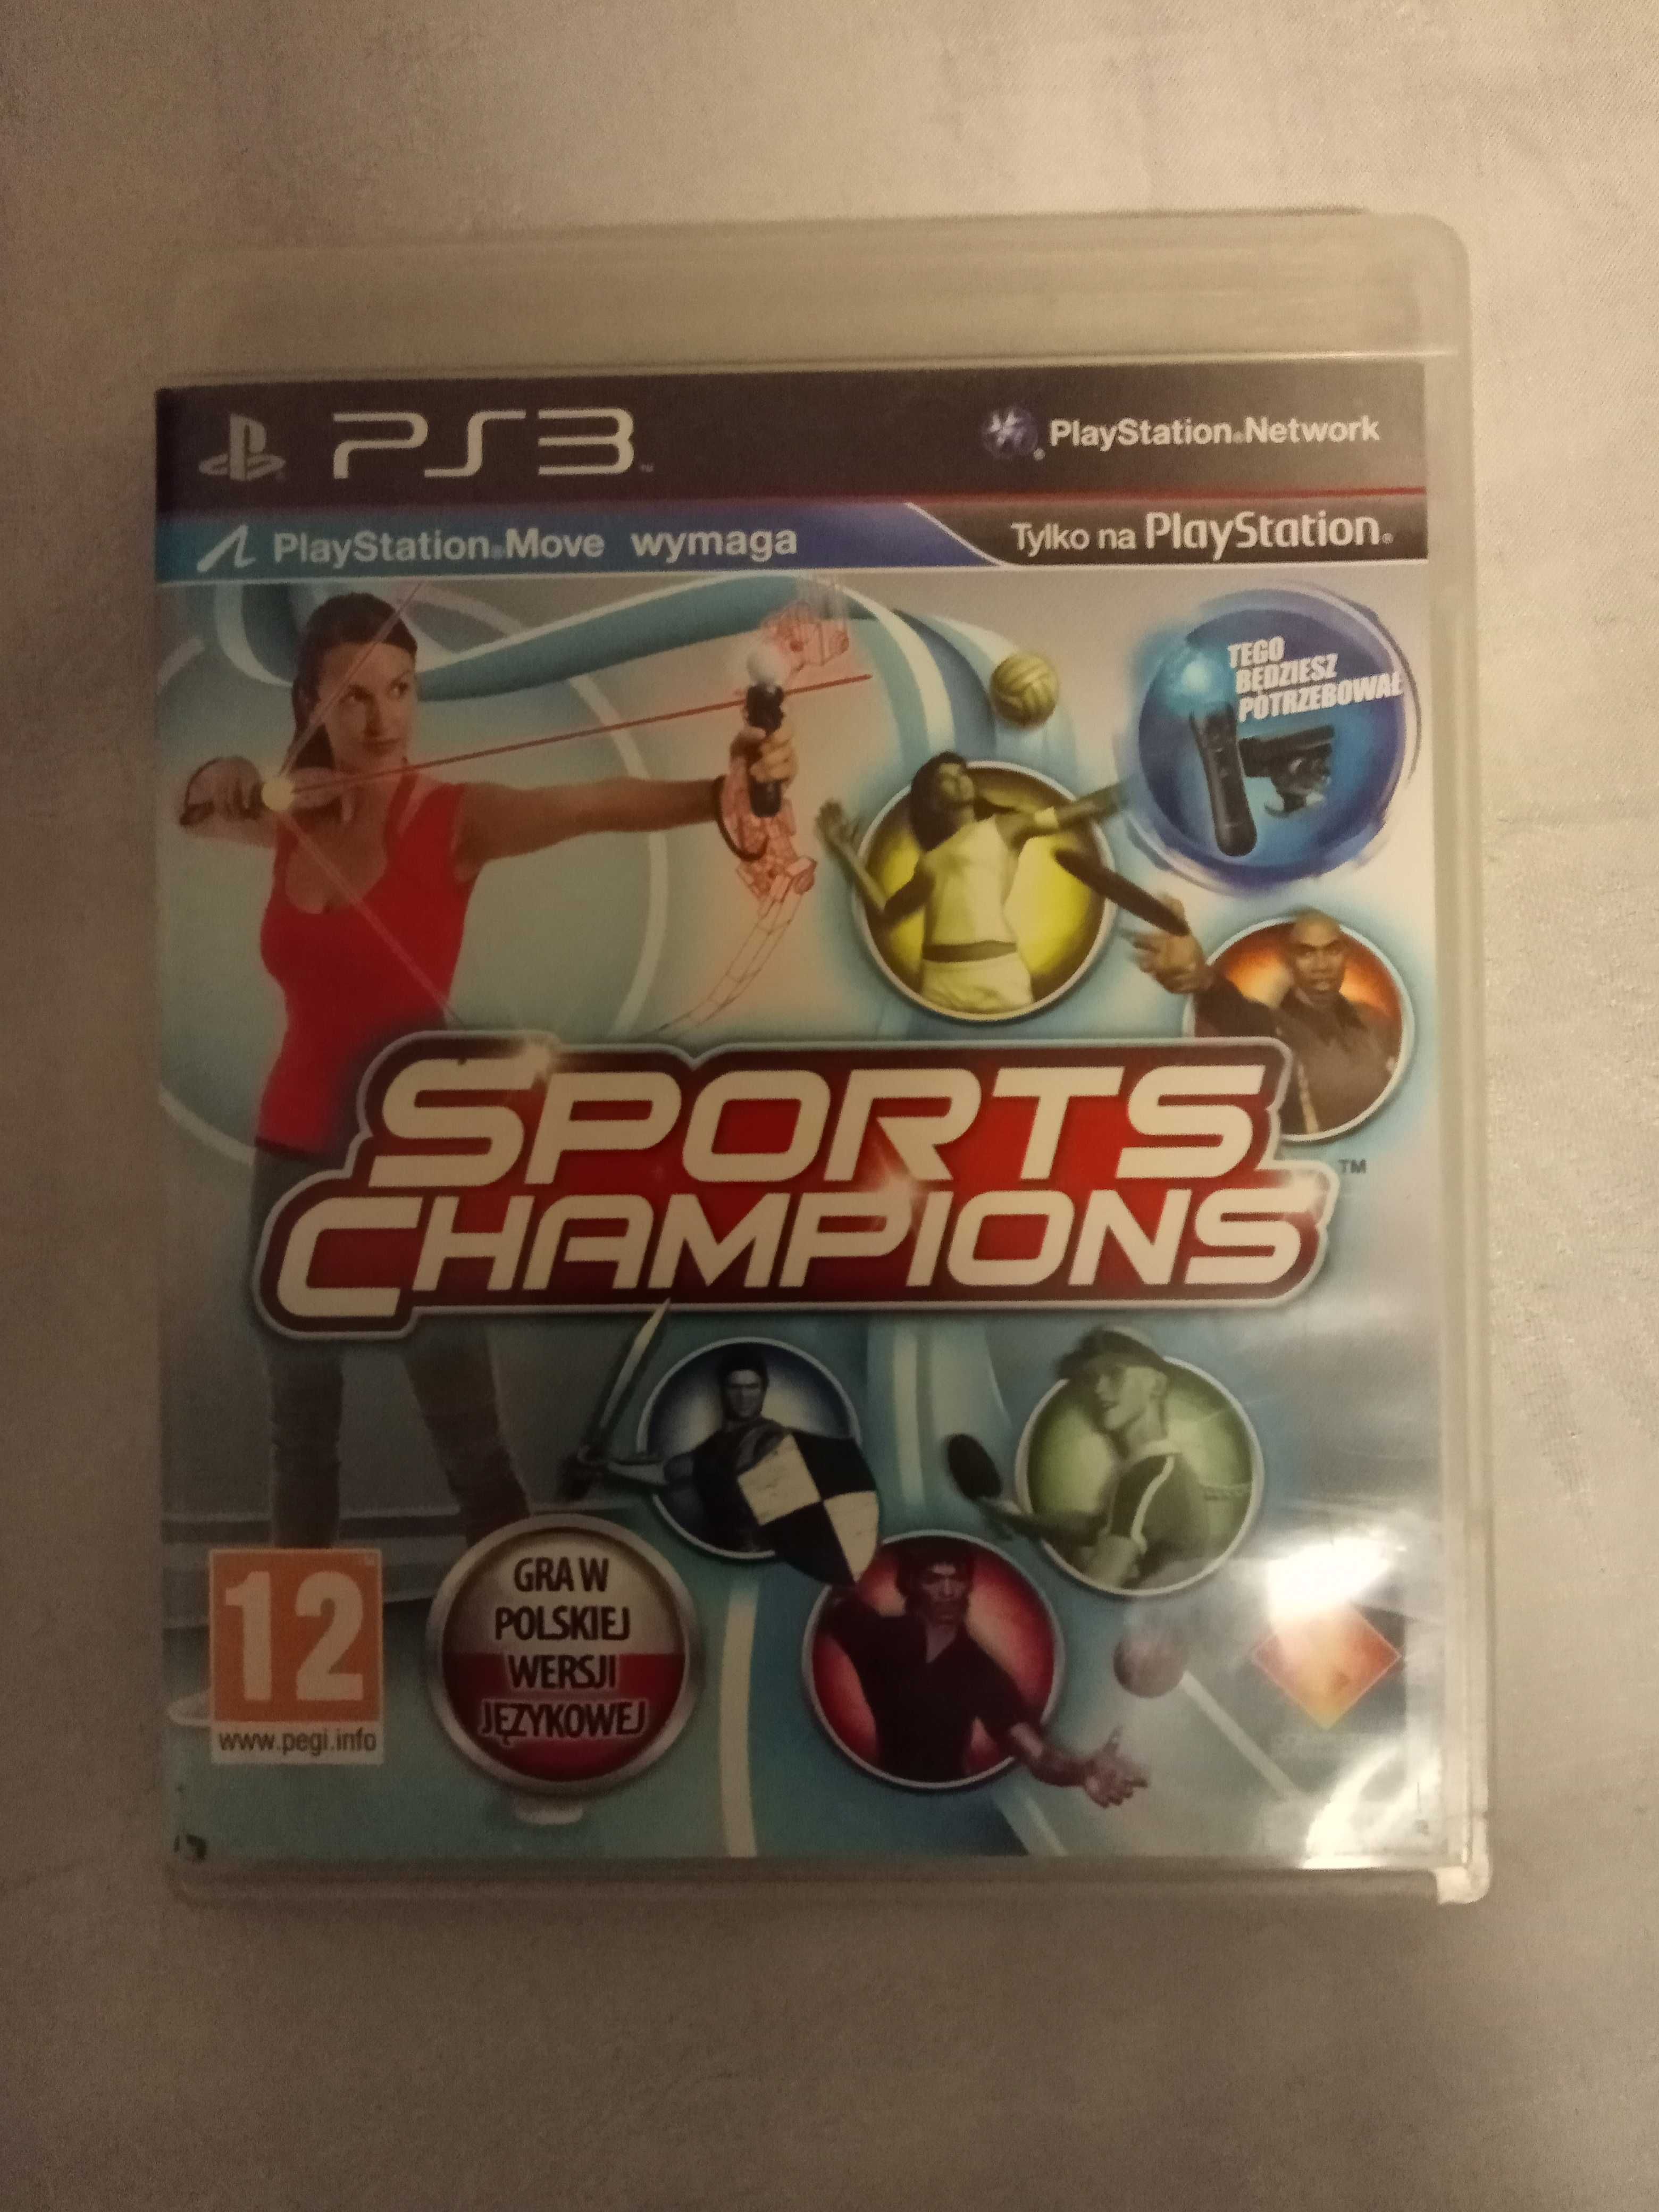 PlayStation 3 Sports Chempions